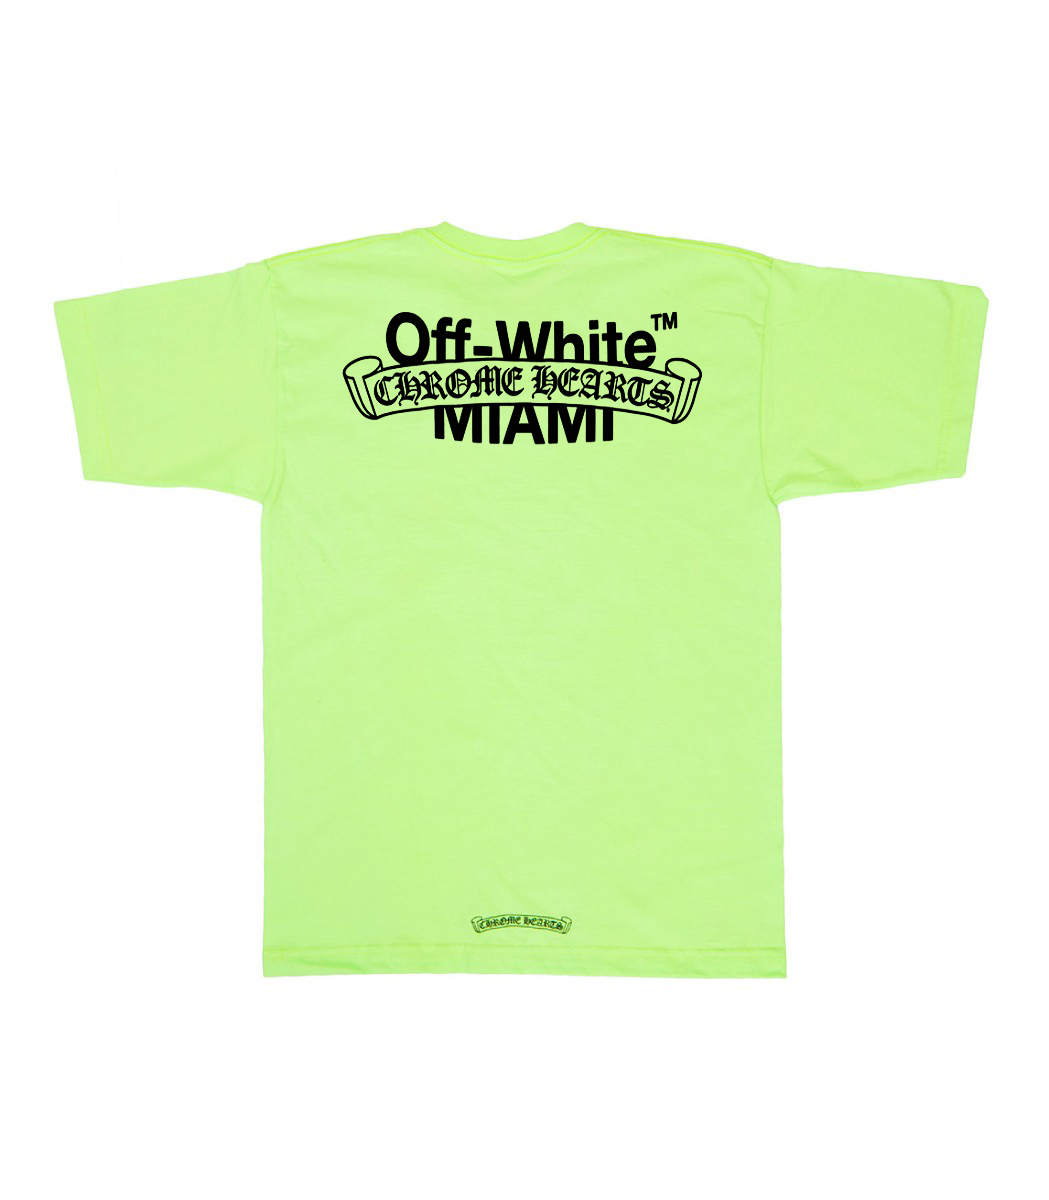 Off-White x Chrome Hearts orange sweatshirts drop in Miami today